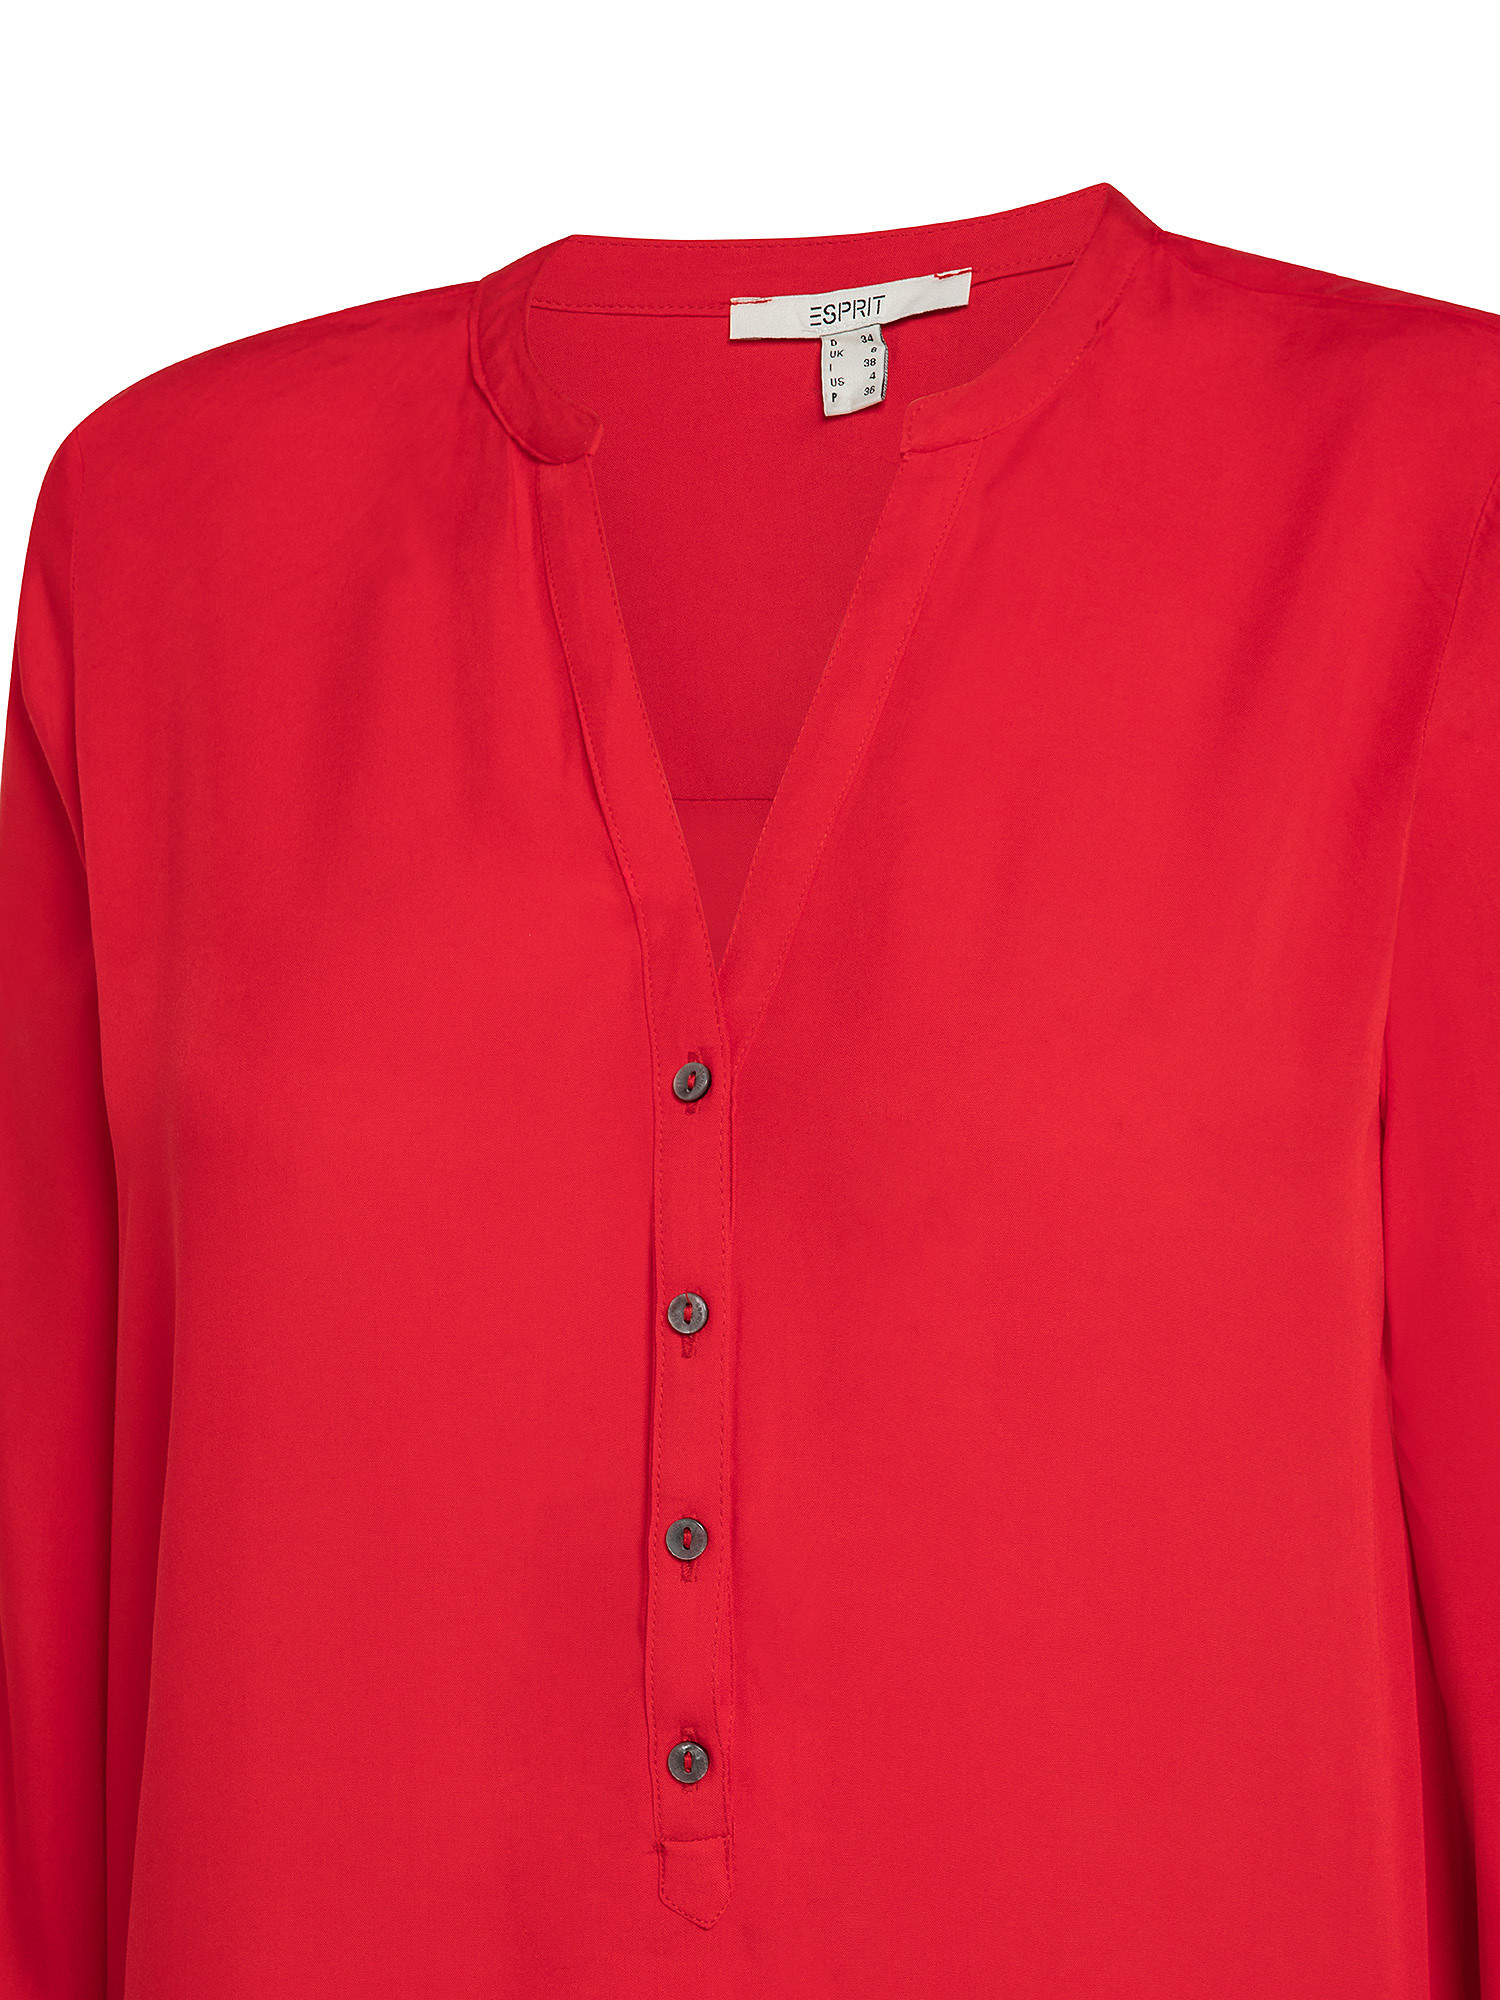 Blusa con maniche regolabili, Rosso, large image number 2